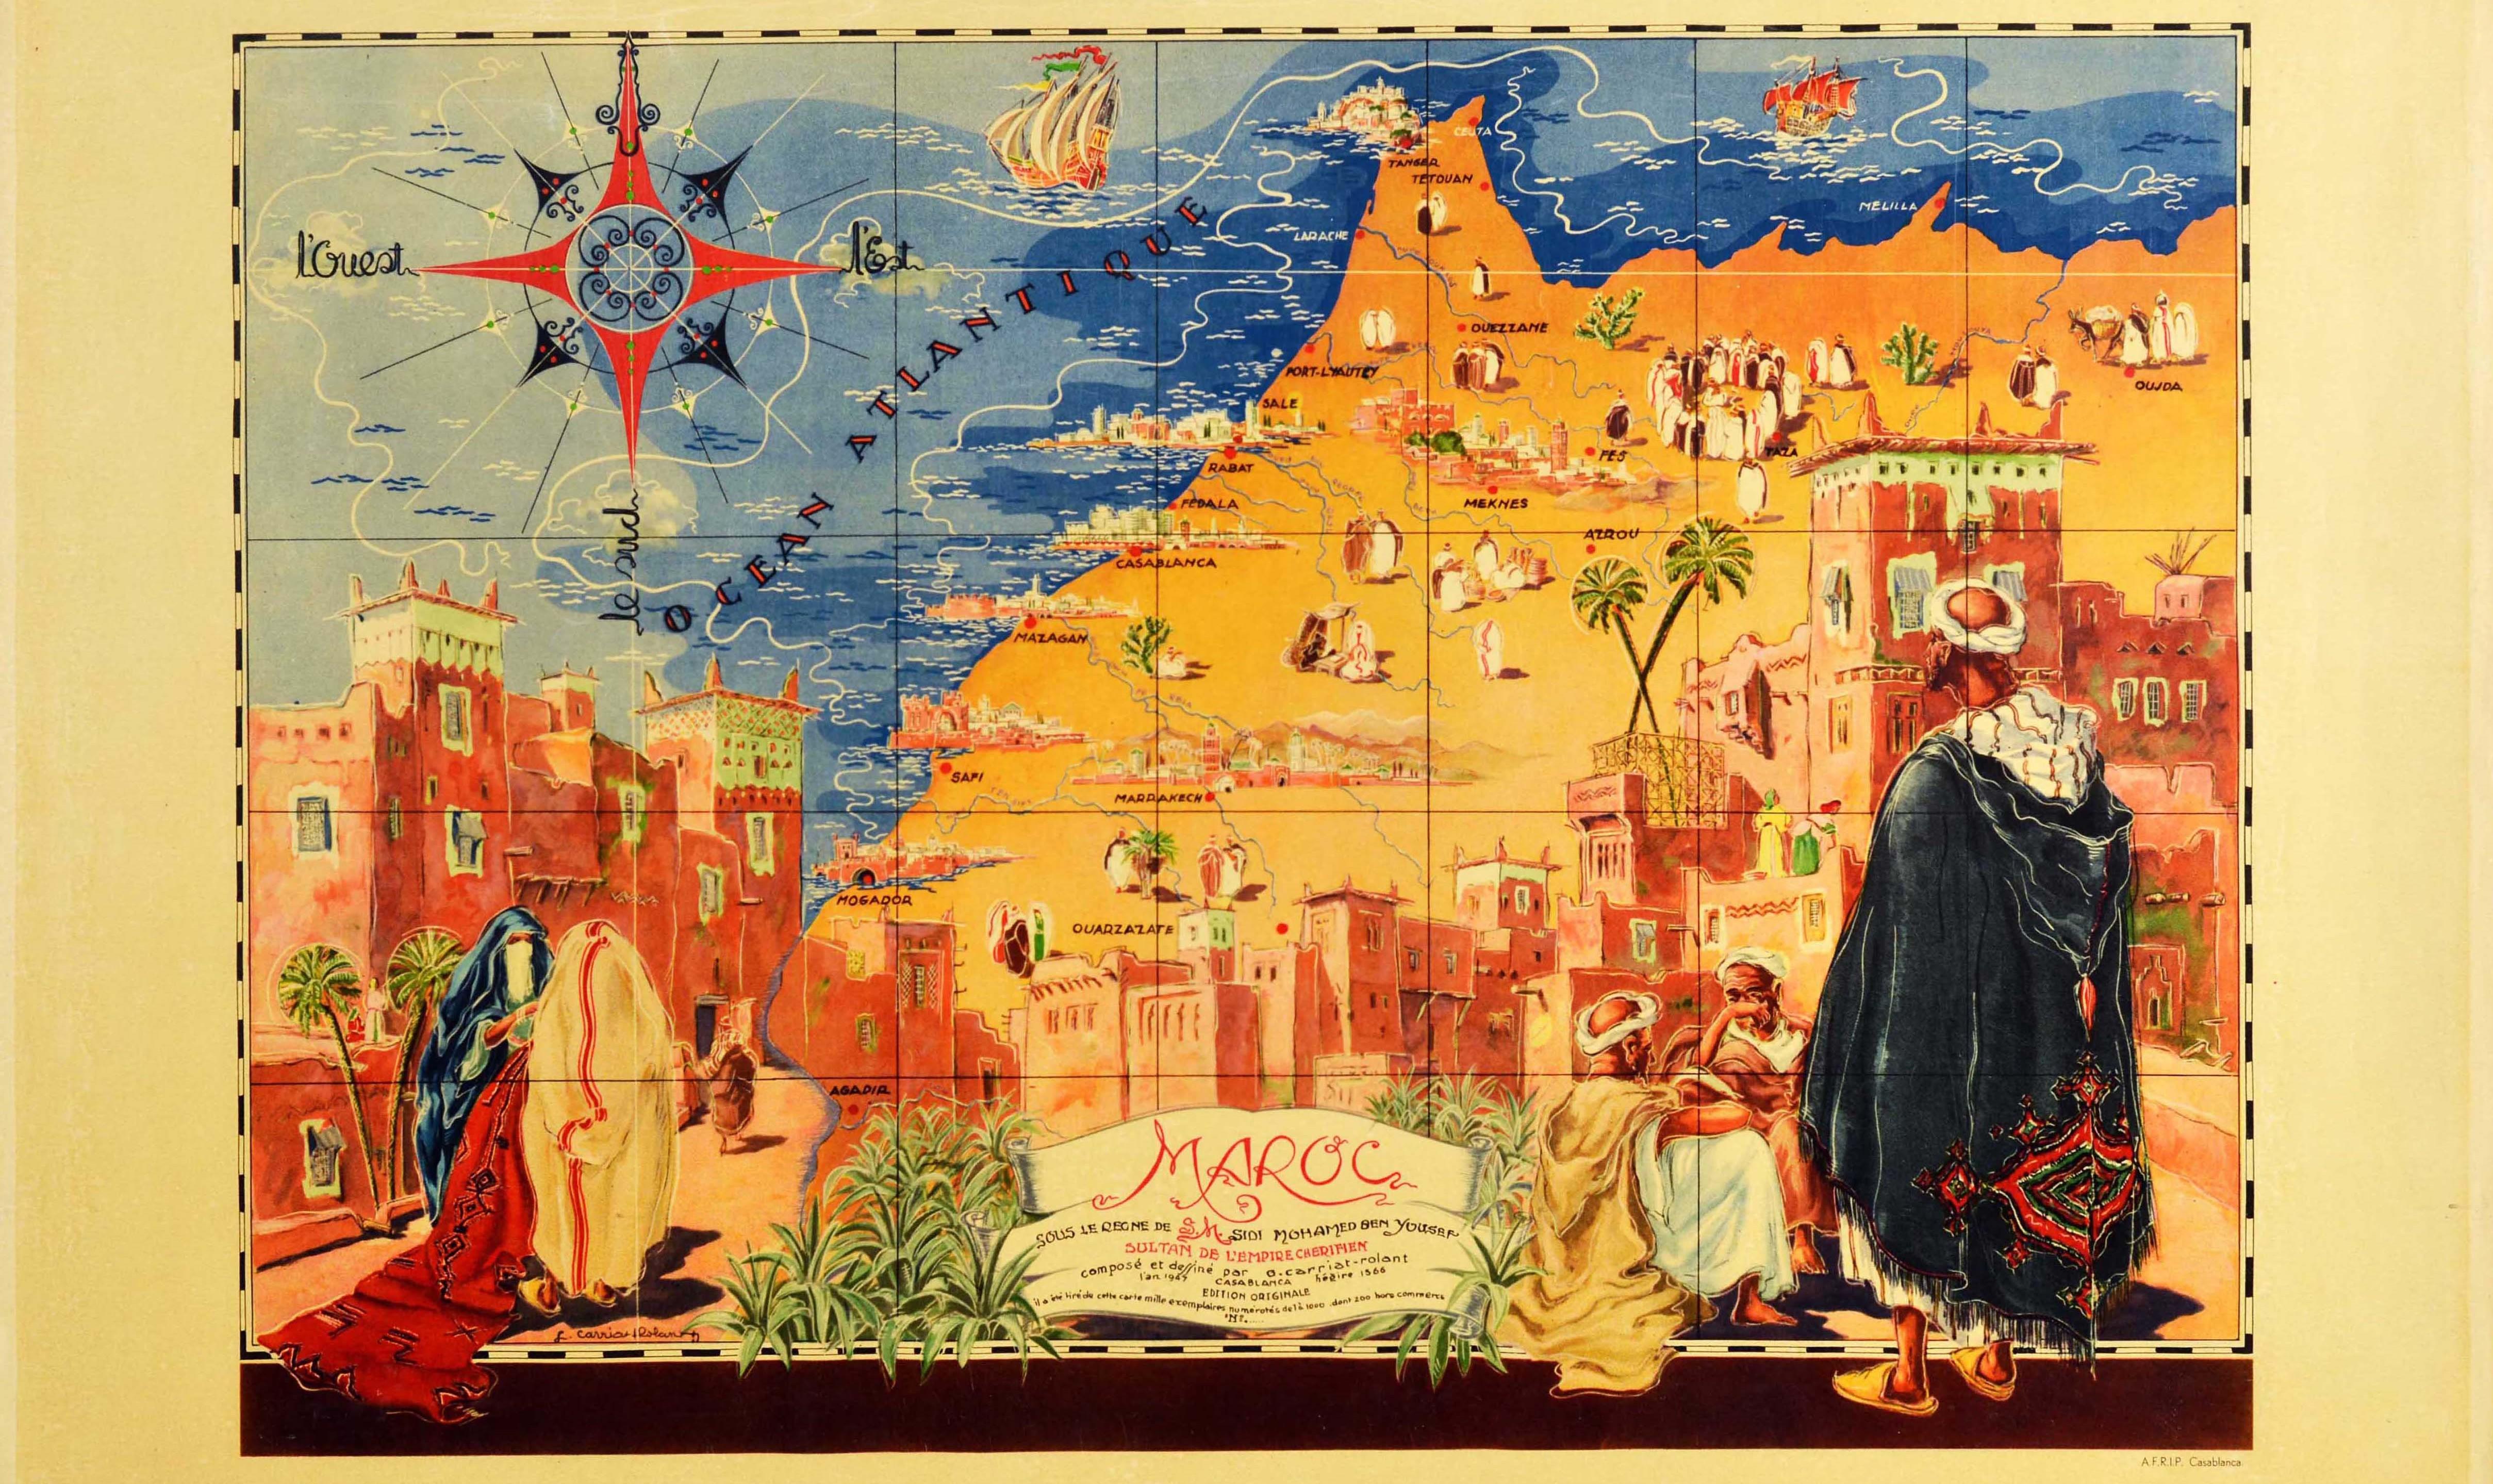 Original Vintage Map Poster Morocco Maroc Regne Sidi Mohamed Ben Yousef Sultan - Print by G. Carriat-Rolant